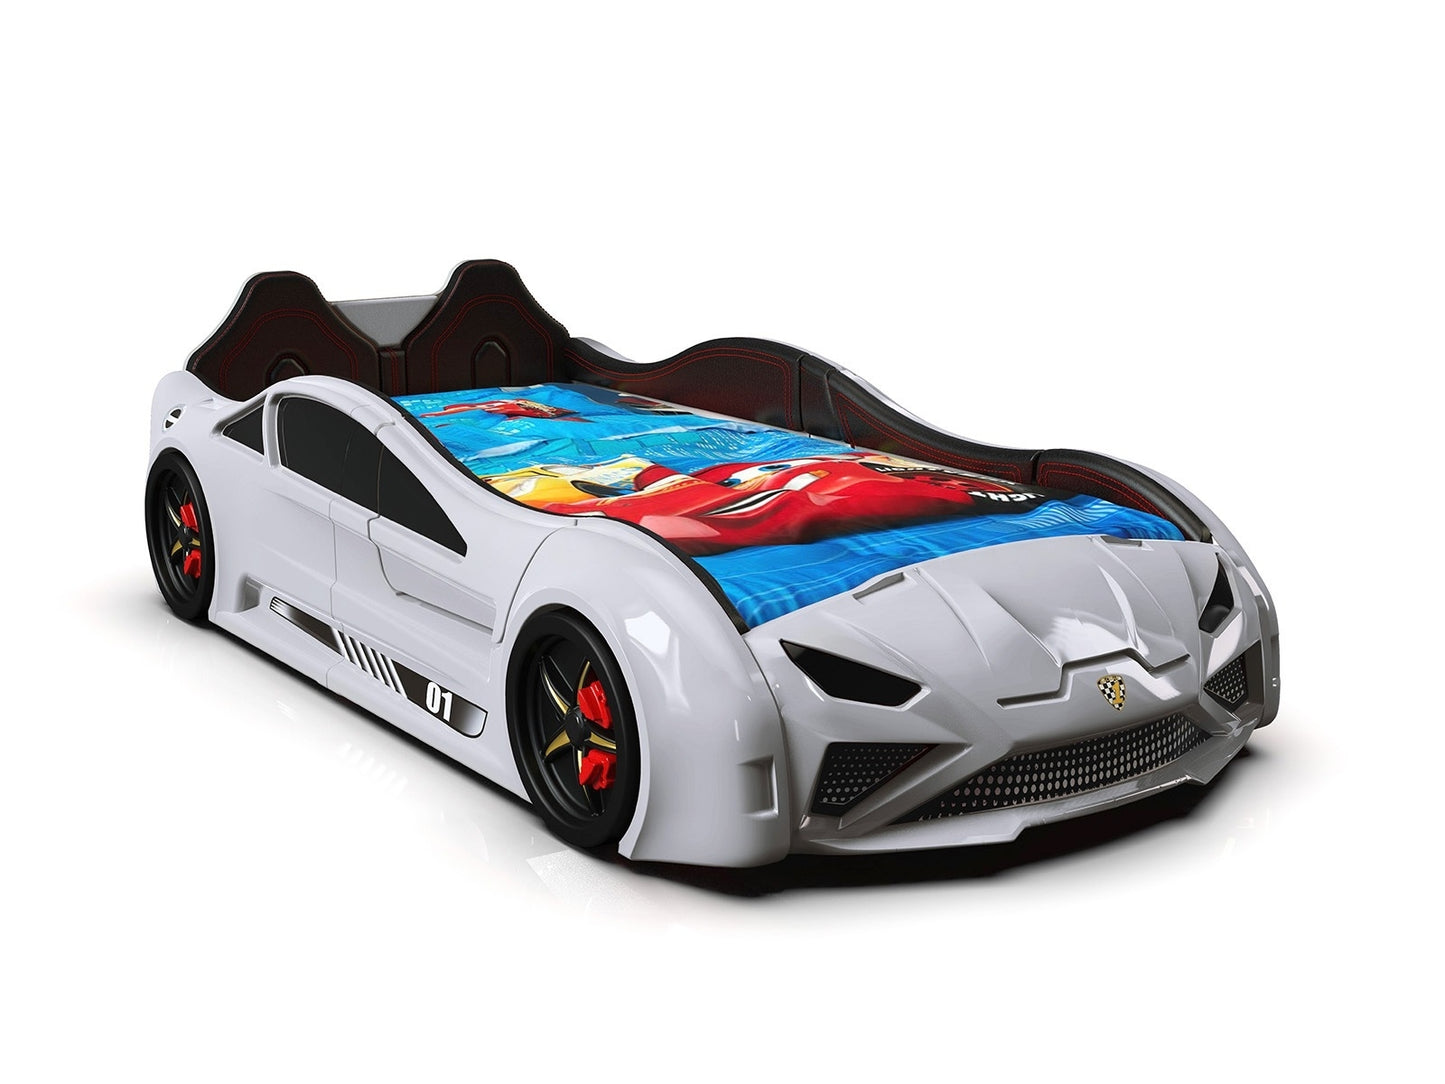 Lamborghini Race Car Bed - With Winged Doors, LED lights